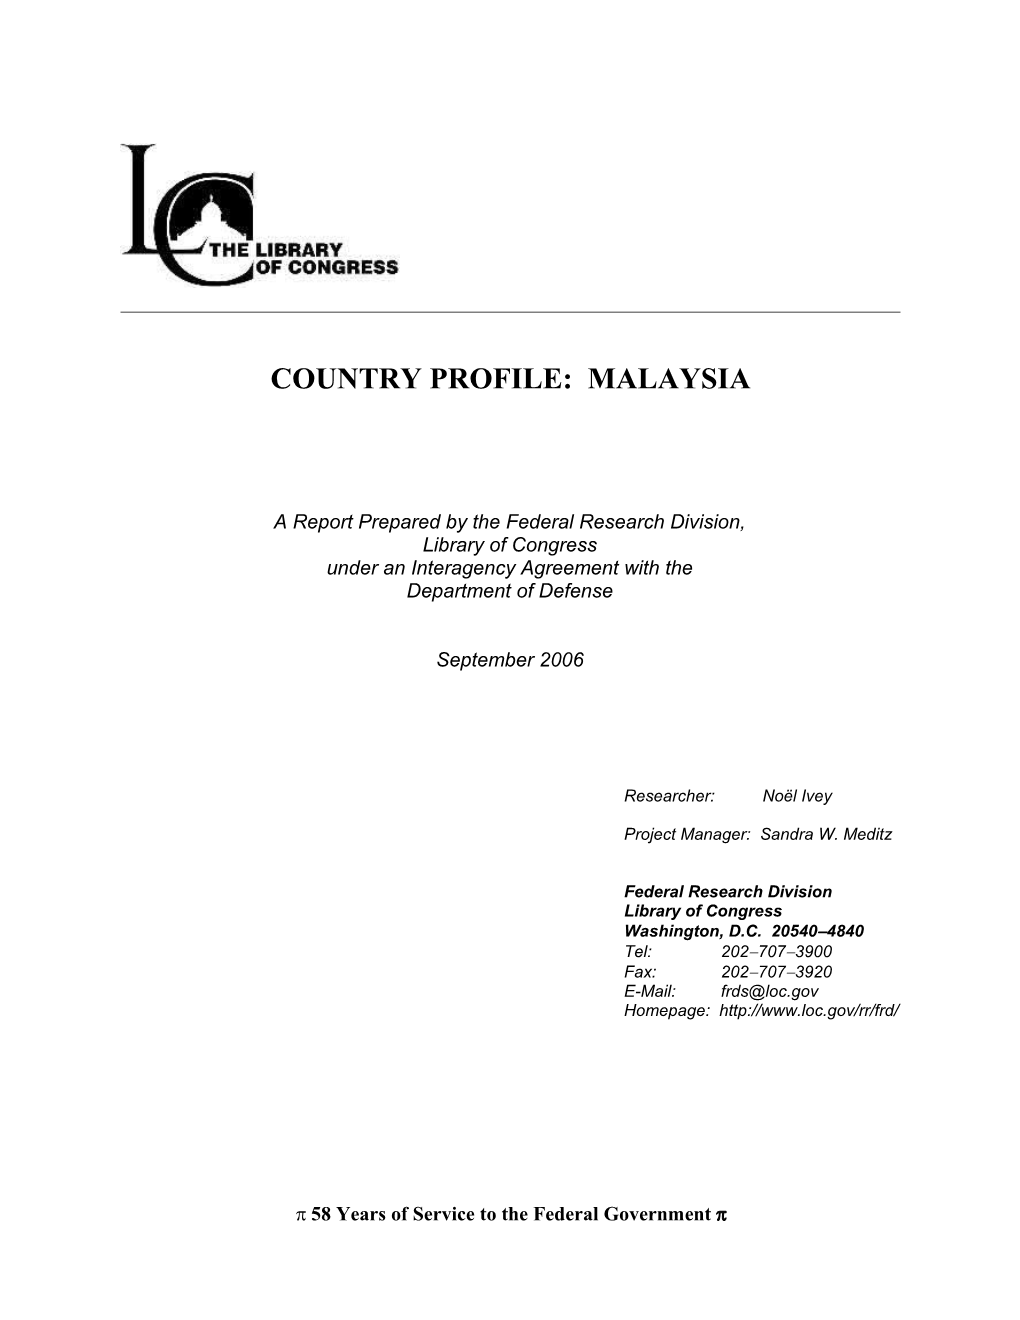 Country Profile: Malaysia